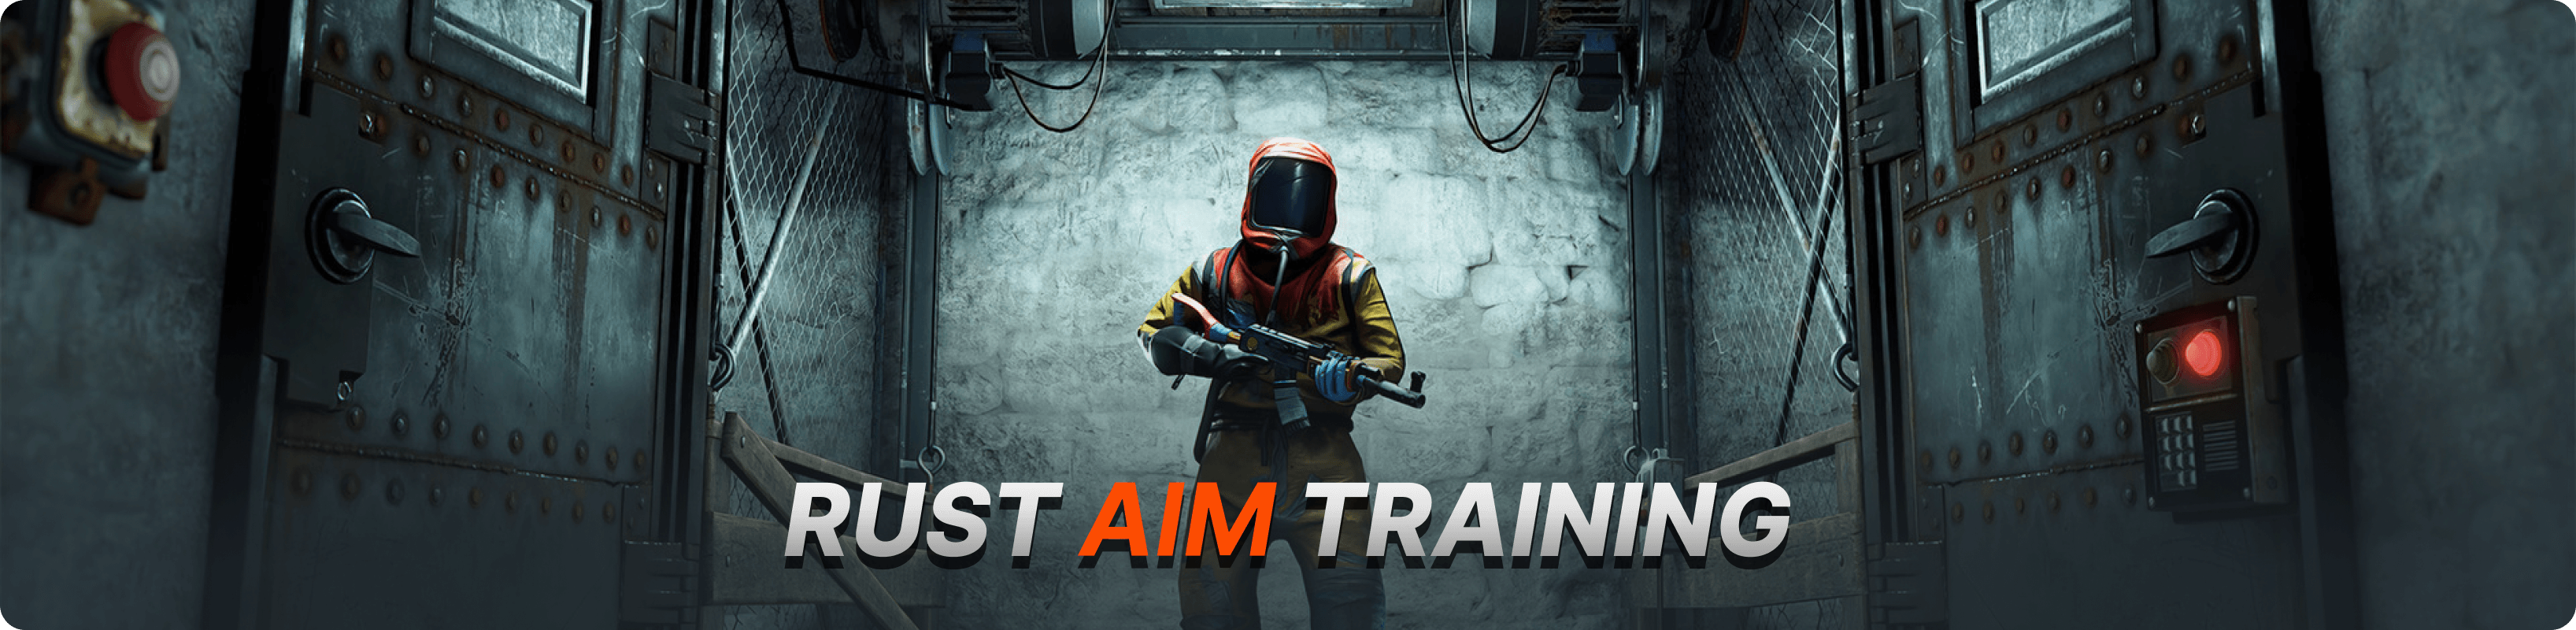 Aim Trainer: Train aim mechanics and practice FPS skills